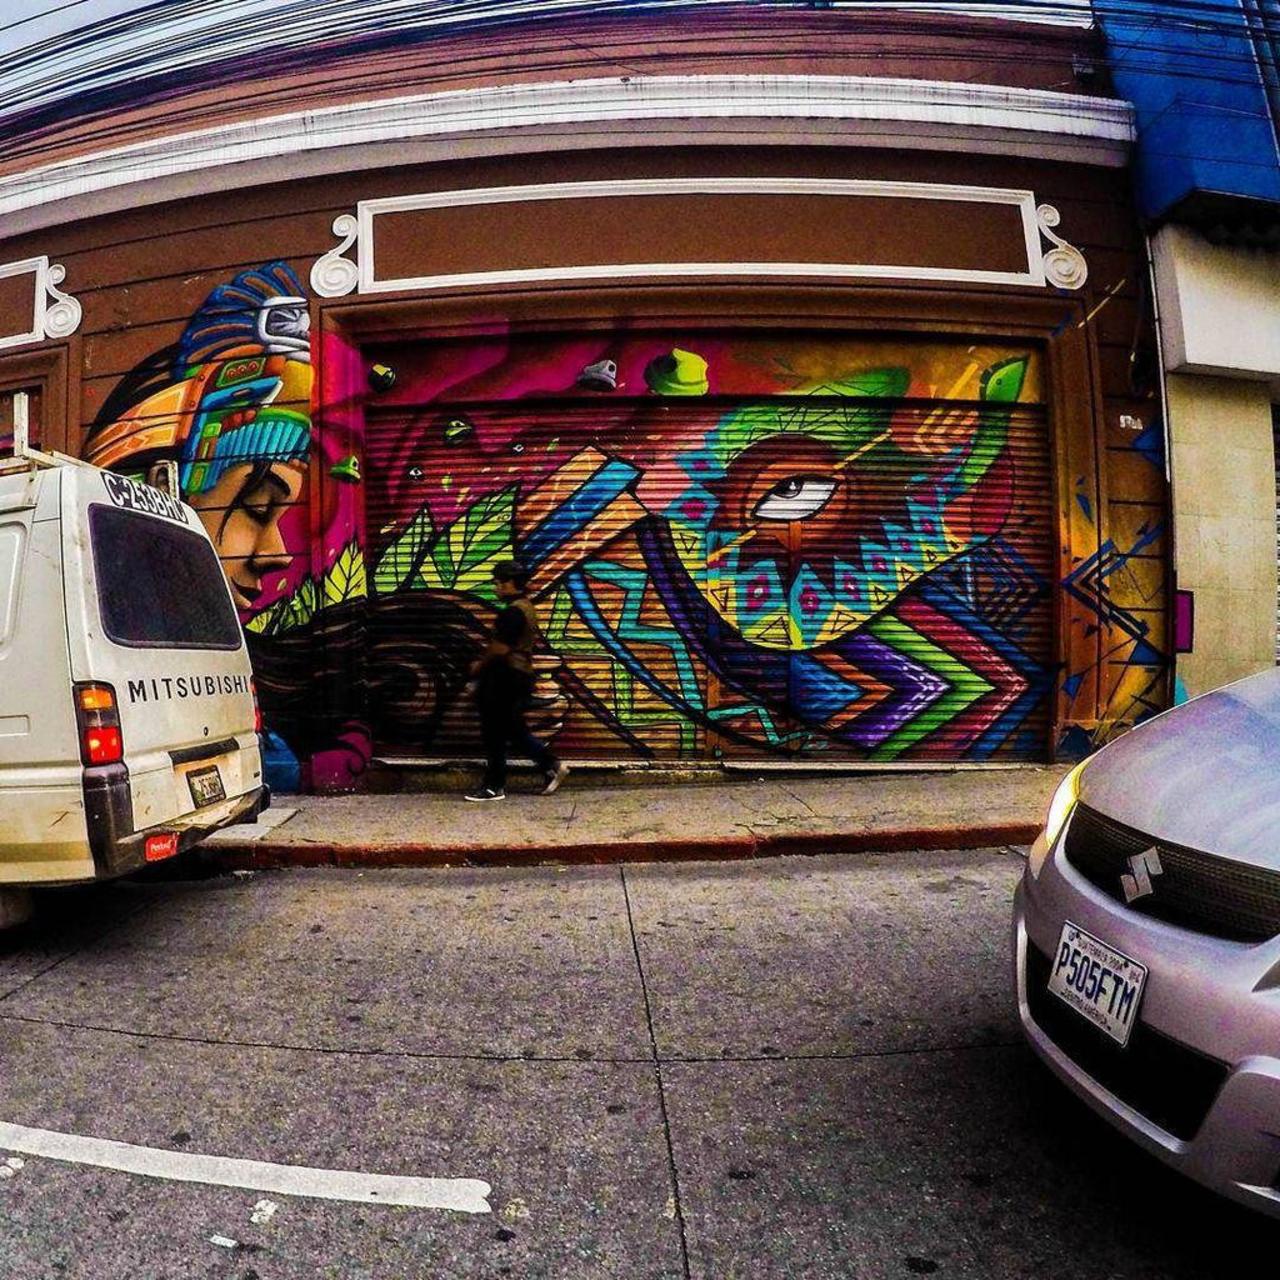 RT @artpushr: via #pablovelasquez_l "http://ift.tt/1YI5wpr" #graffiti #streetart http://t.co/c9C7KwJrvp